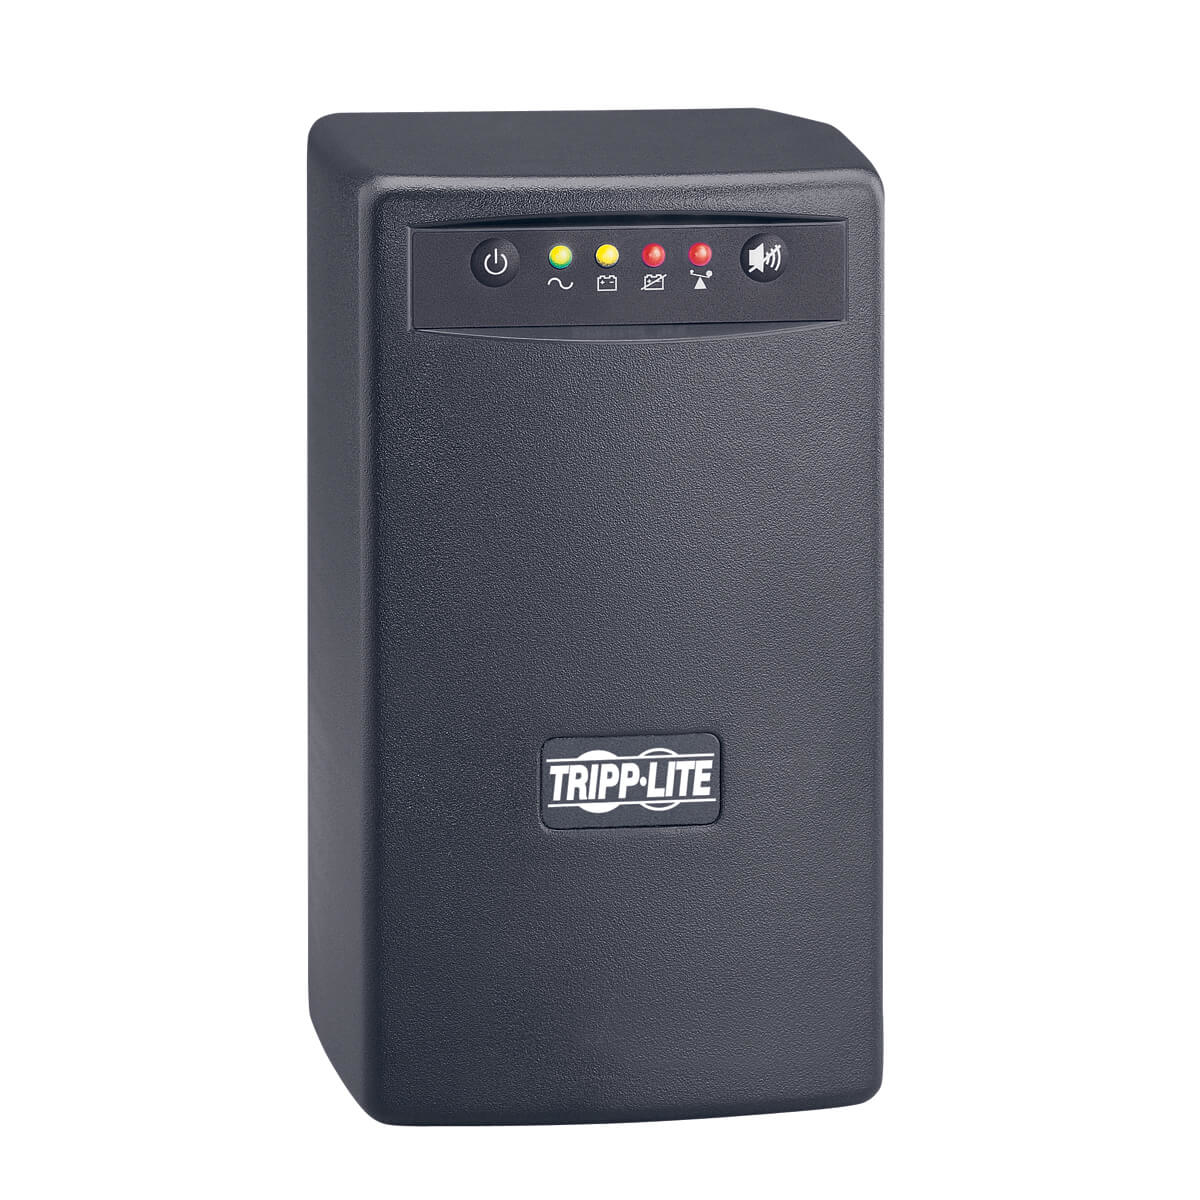 Tripp Lite OMNISMART500 UPS No Break OmniSmart interactivo en Línea de 120V, 500VA y 300W, Torre, con puerto USB